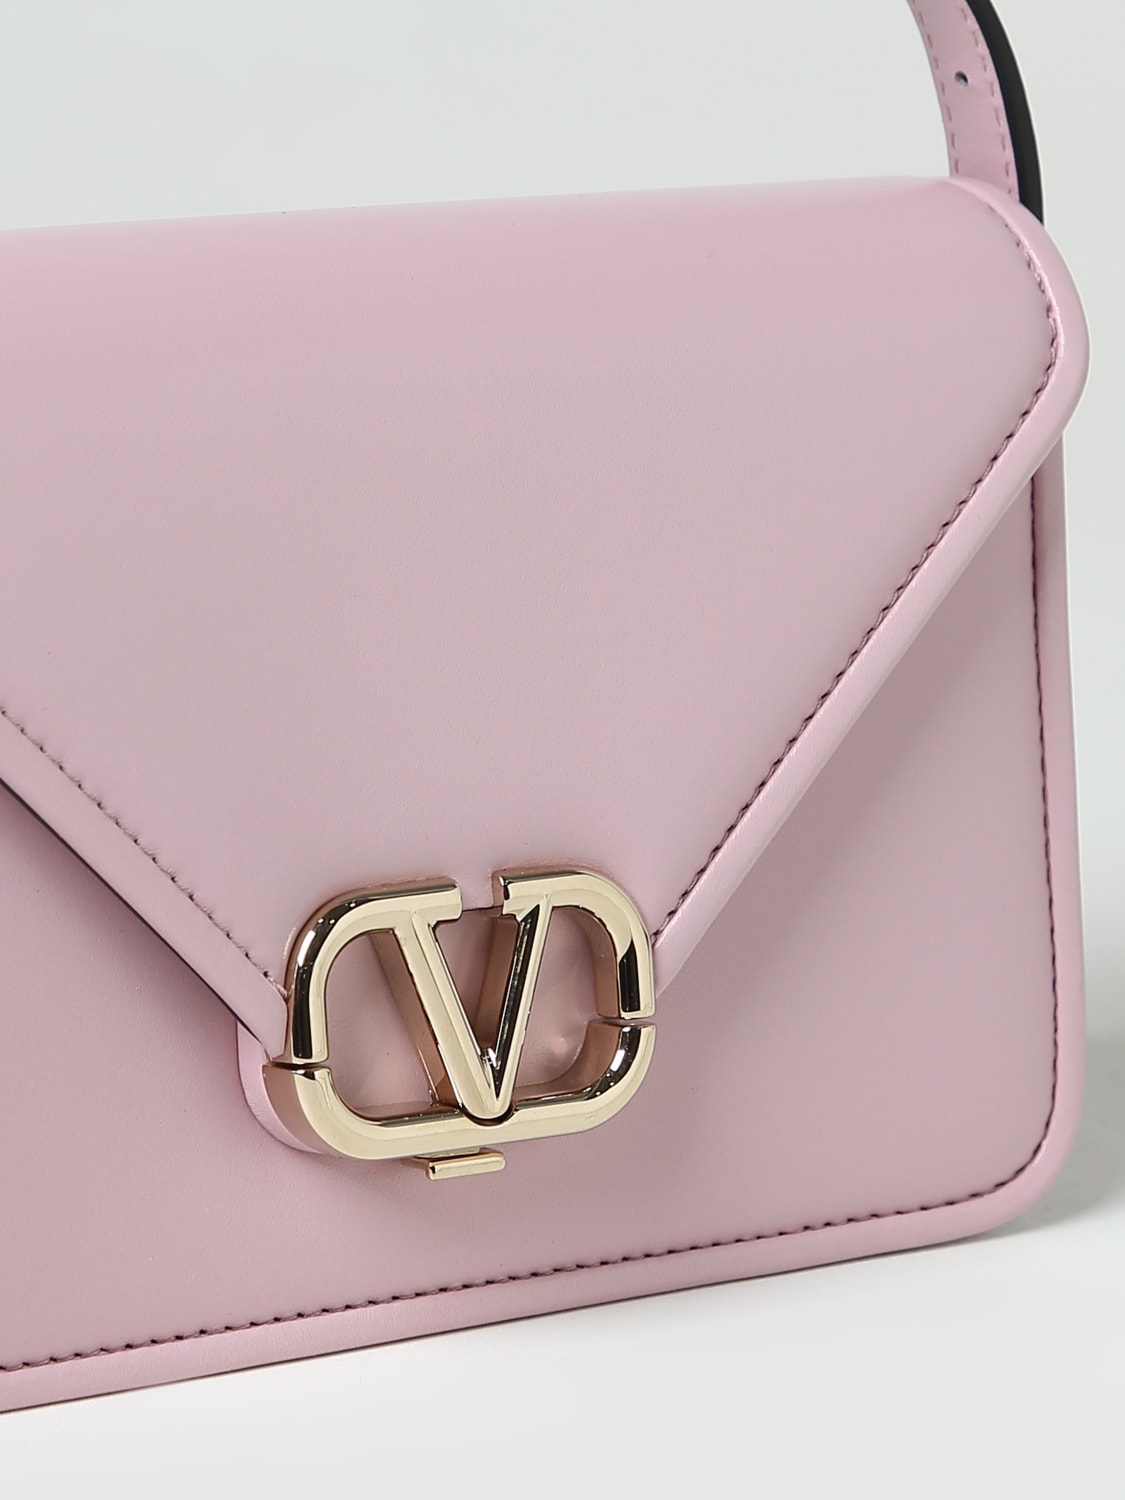 VALENTINO GARAVANI: Letter Bag in - Blush Pink | Valentino Garavani mini bag 3W2B0M59IAI online at GIGLIO.COM